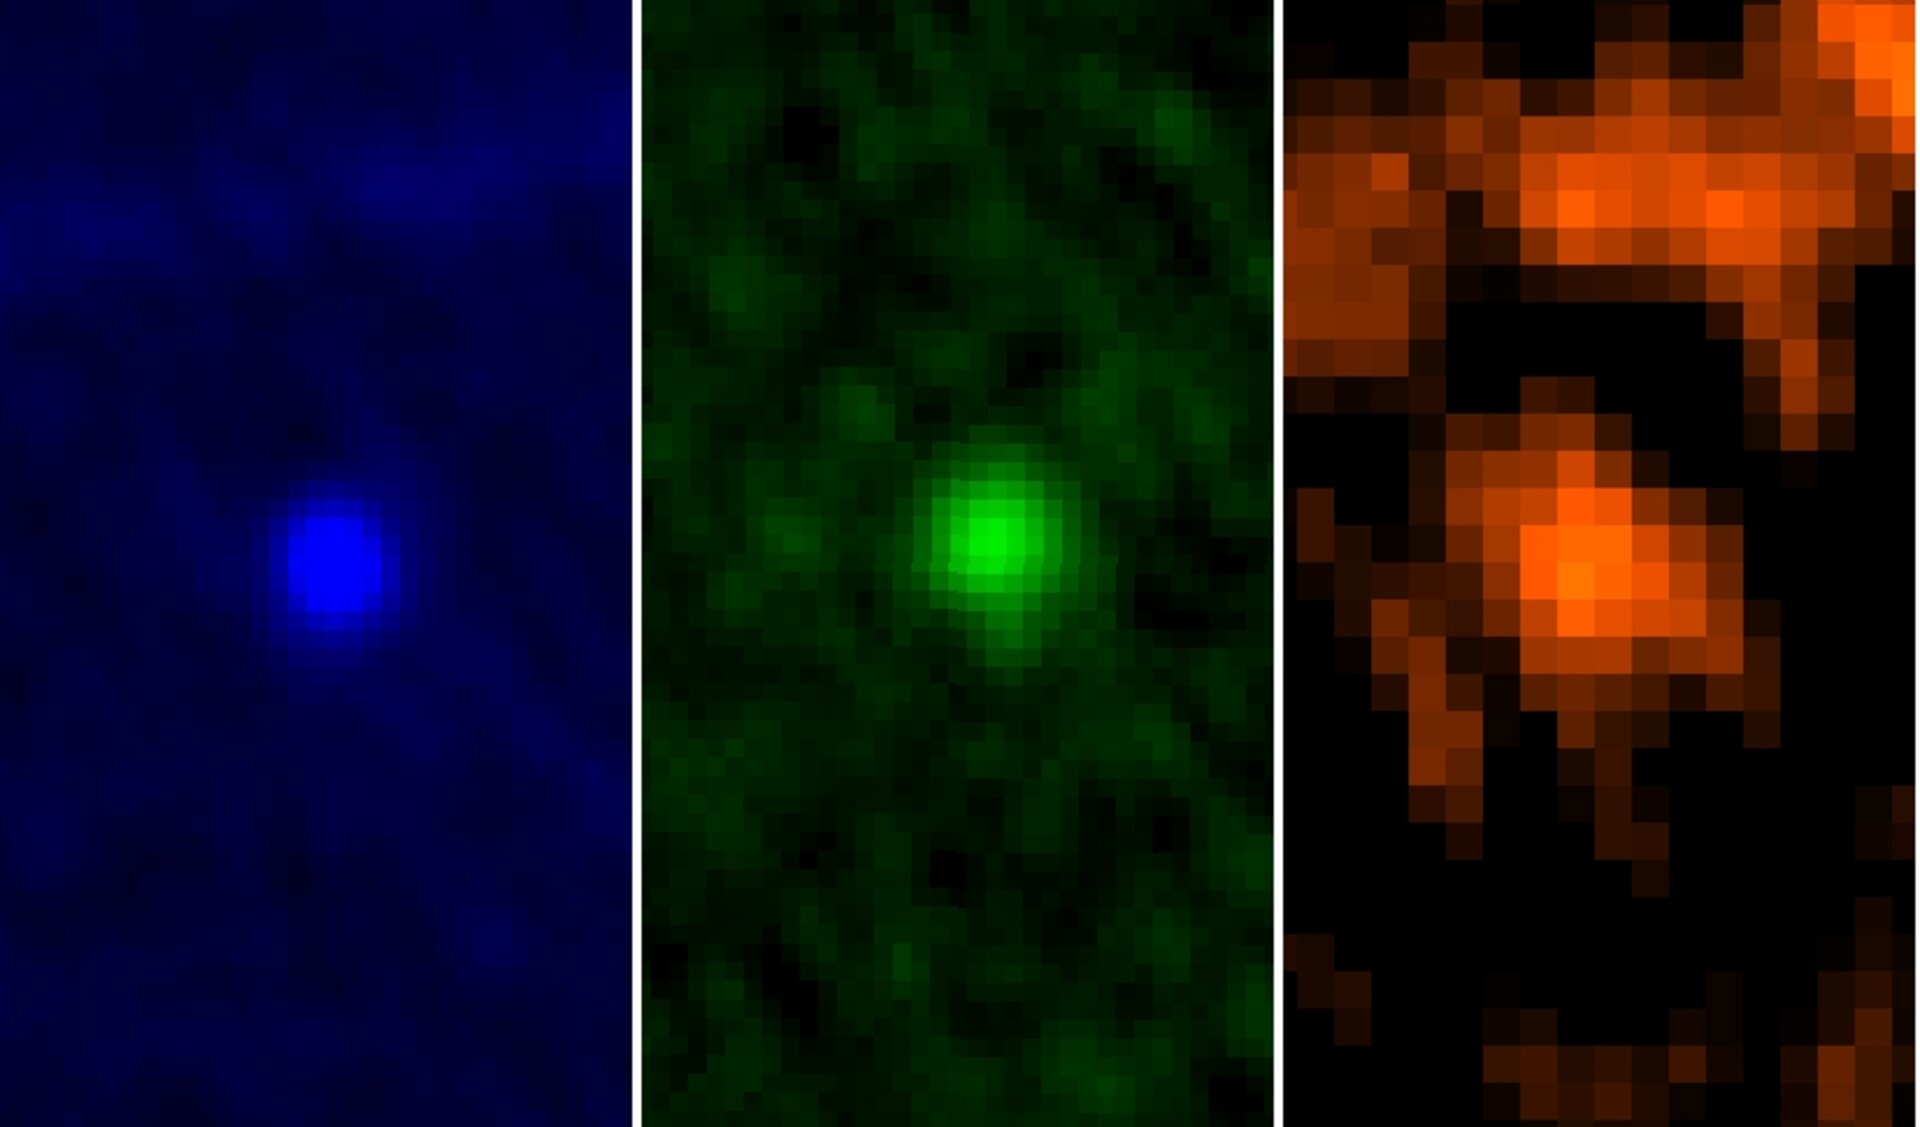 Herschel’s three-colour view of asteroid Apophis